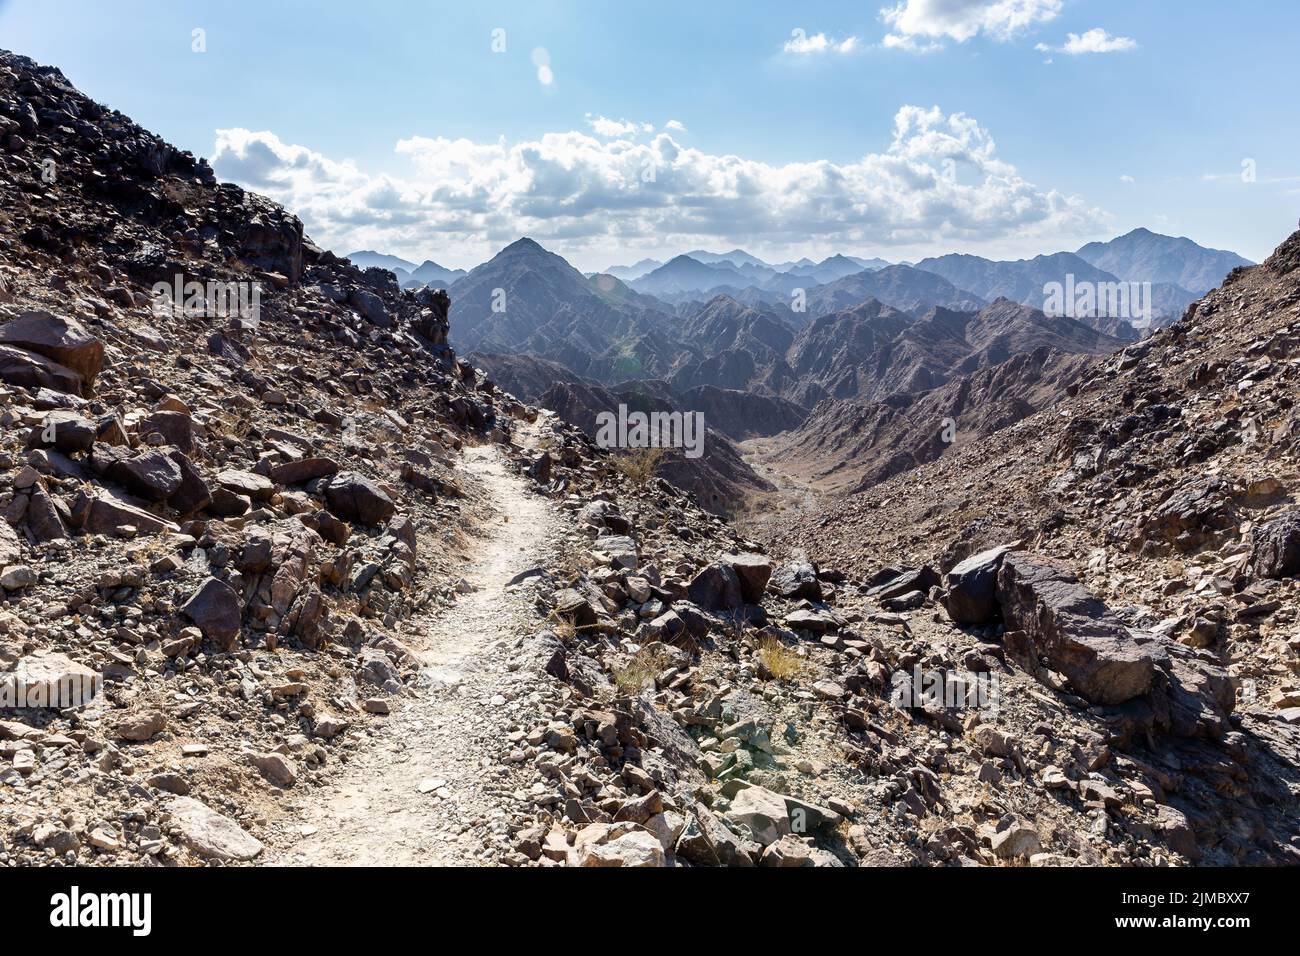 Wadi Shawka narrow hiking trail in rocky limestone Hajar Mountains, United Arab Emirates, with mountain ranges in the background. Stock Photo